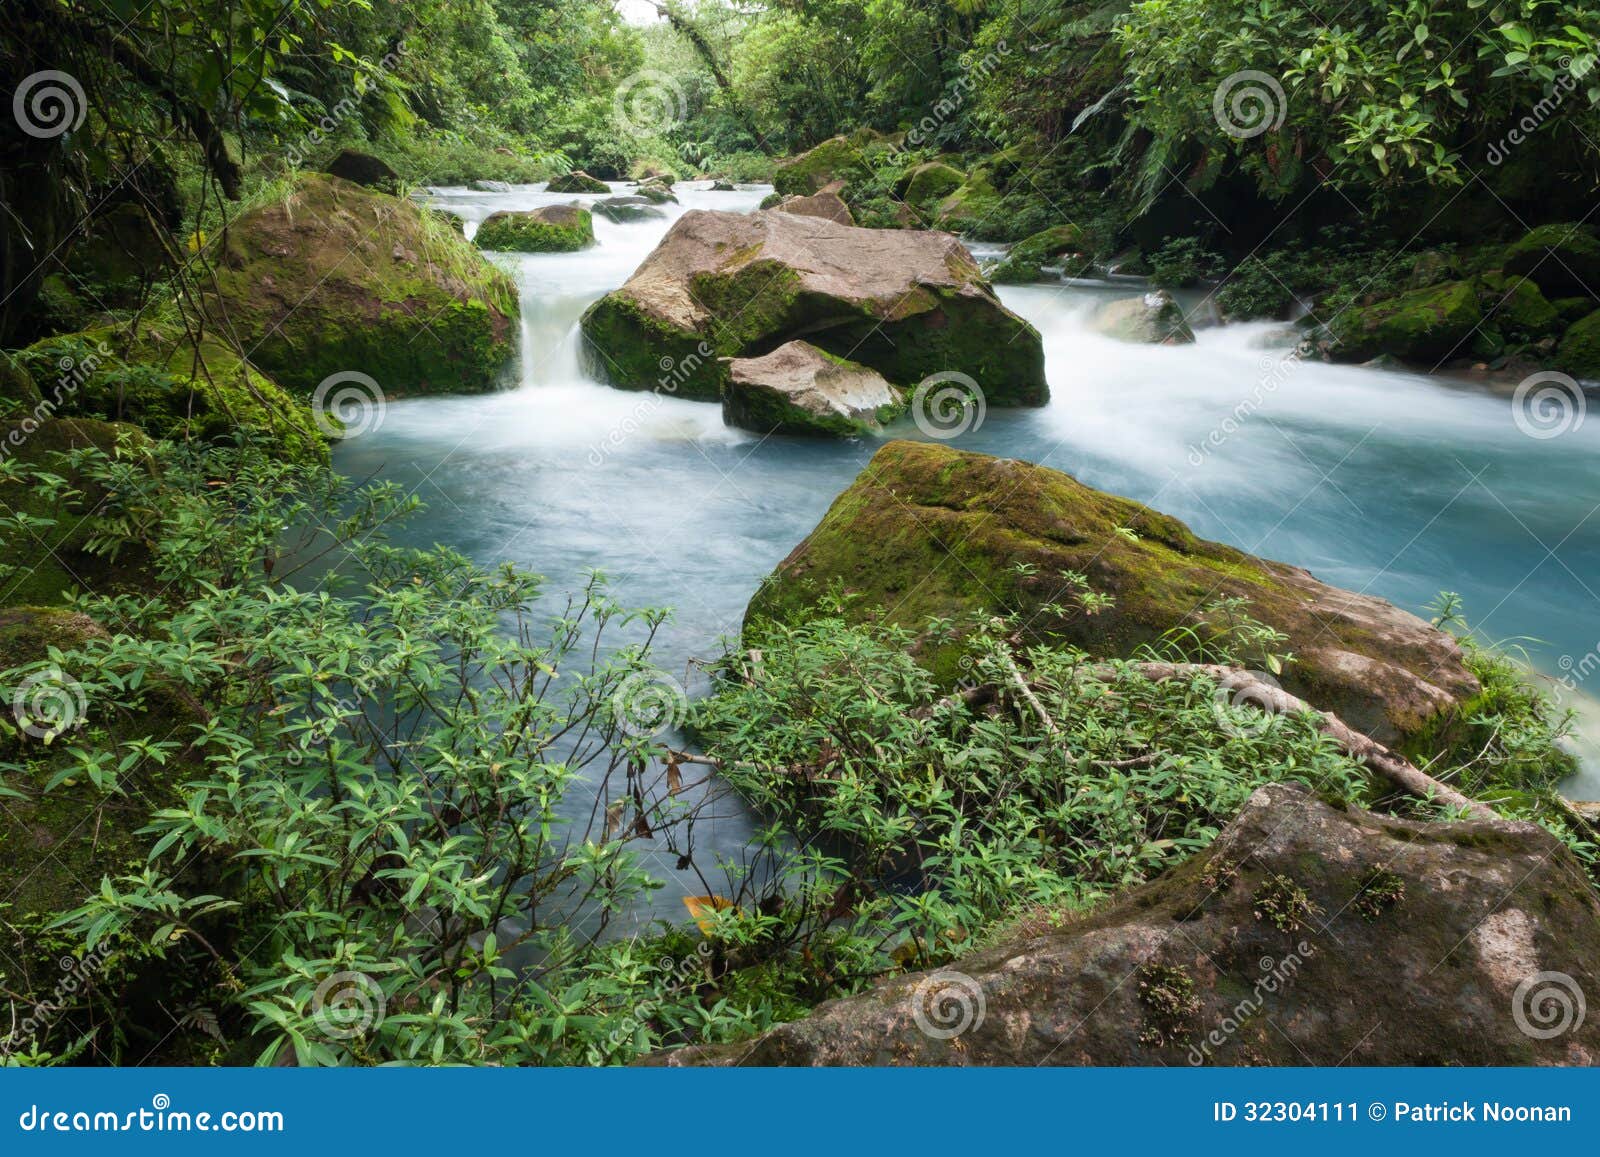 rio celeste river near bijagua, costa rica